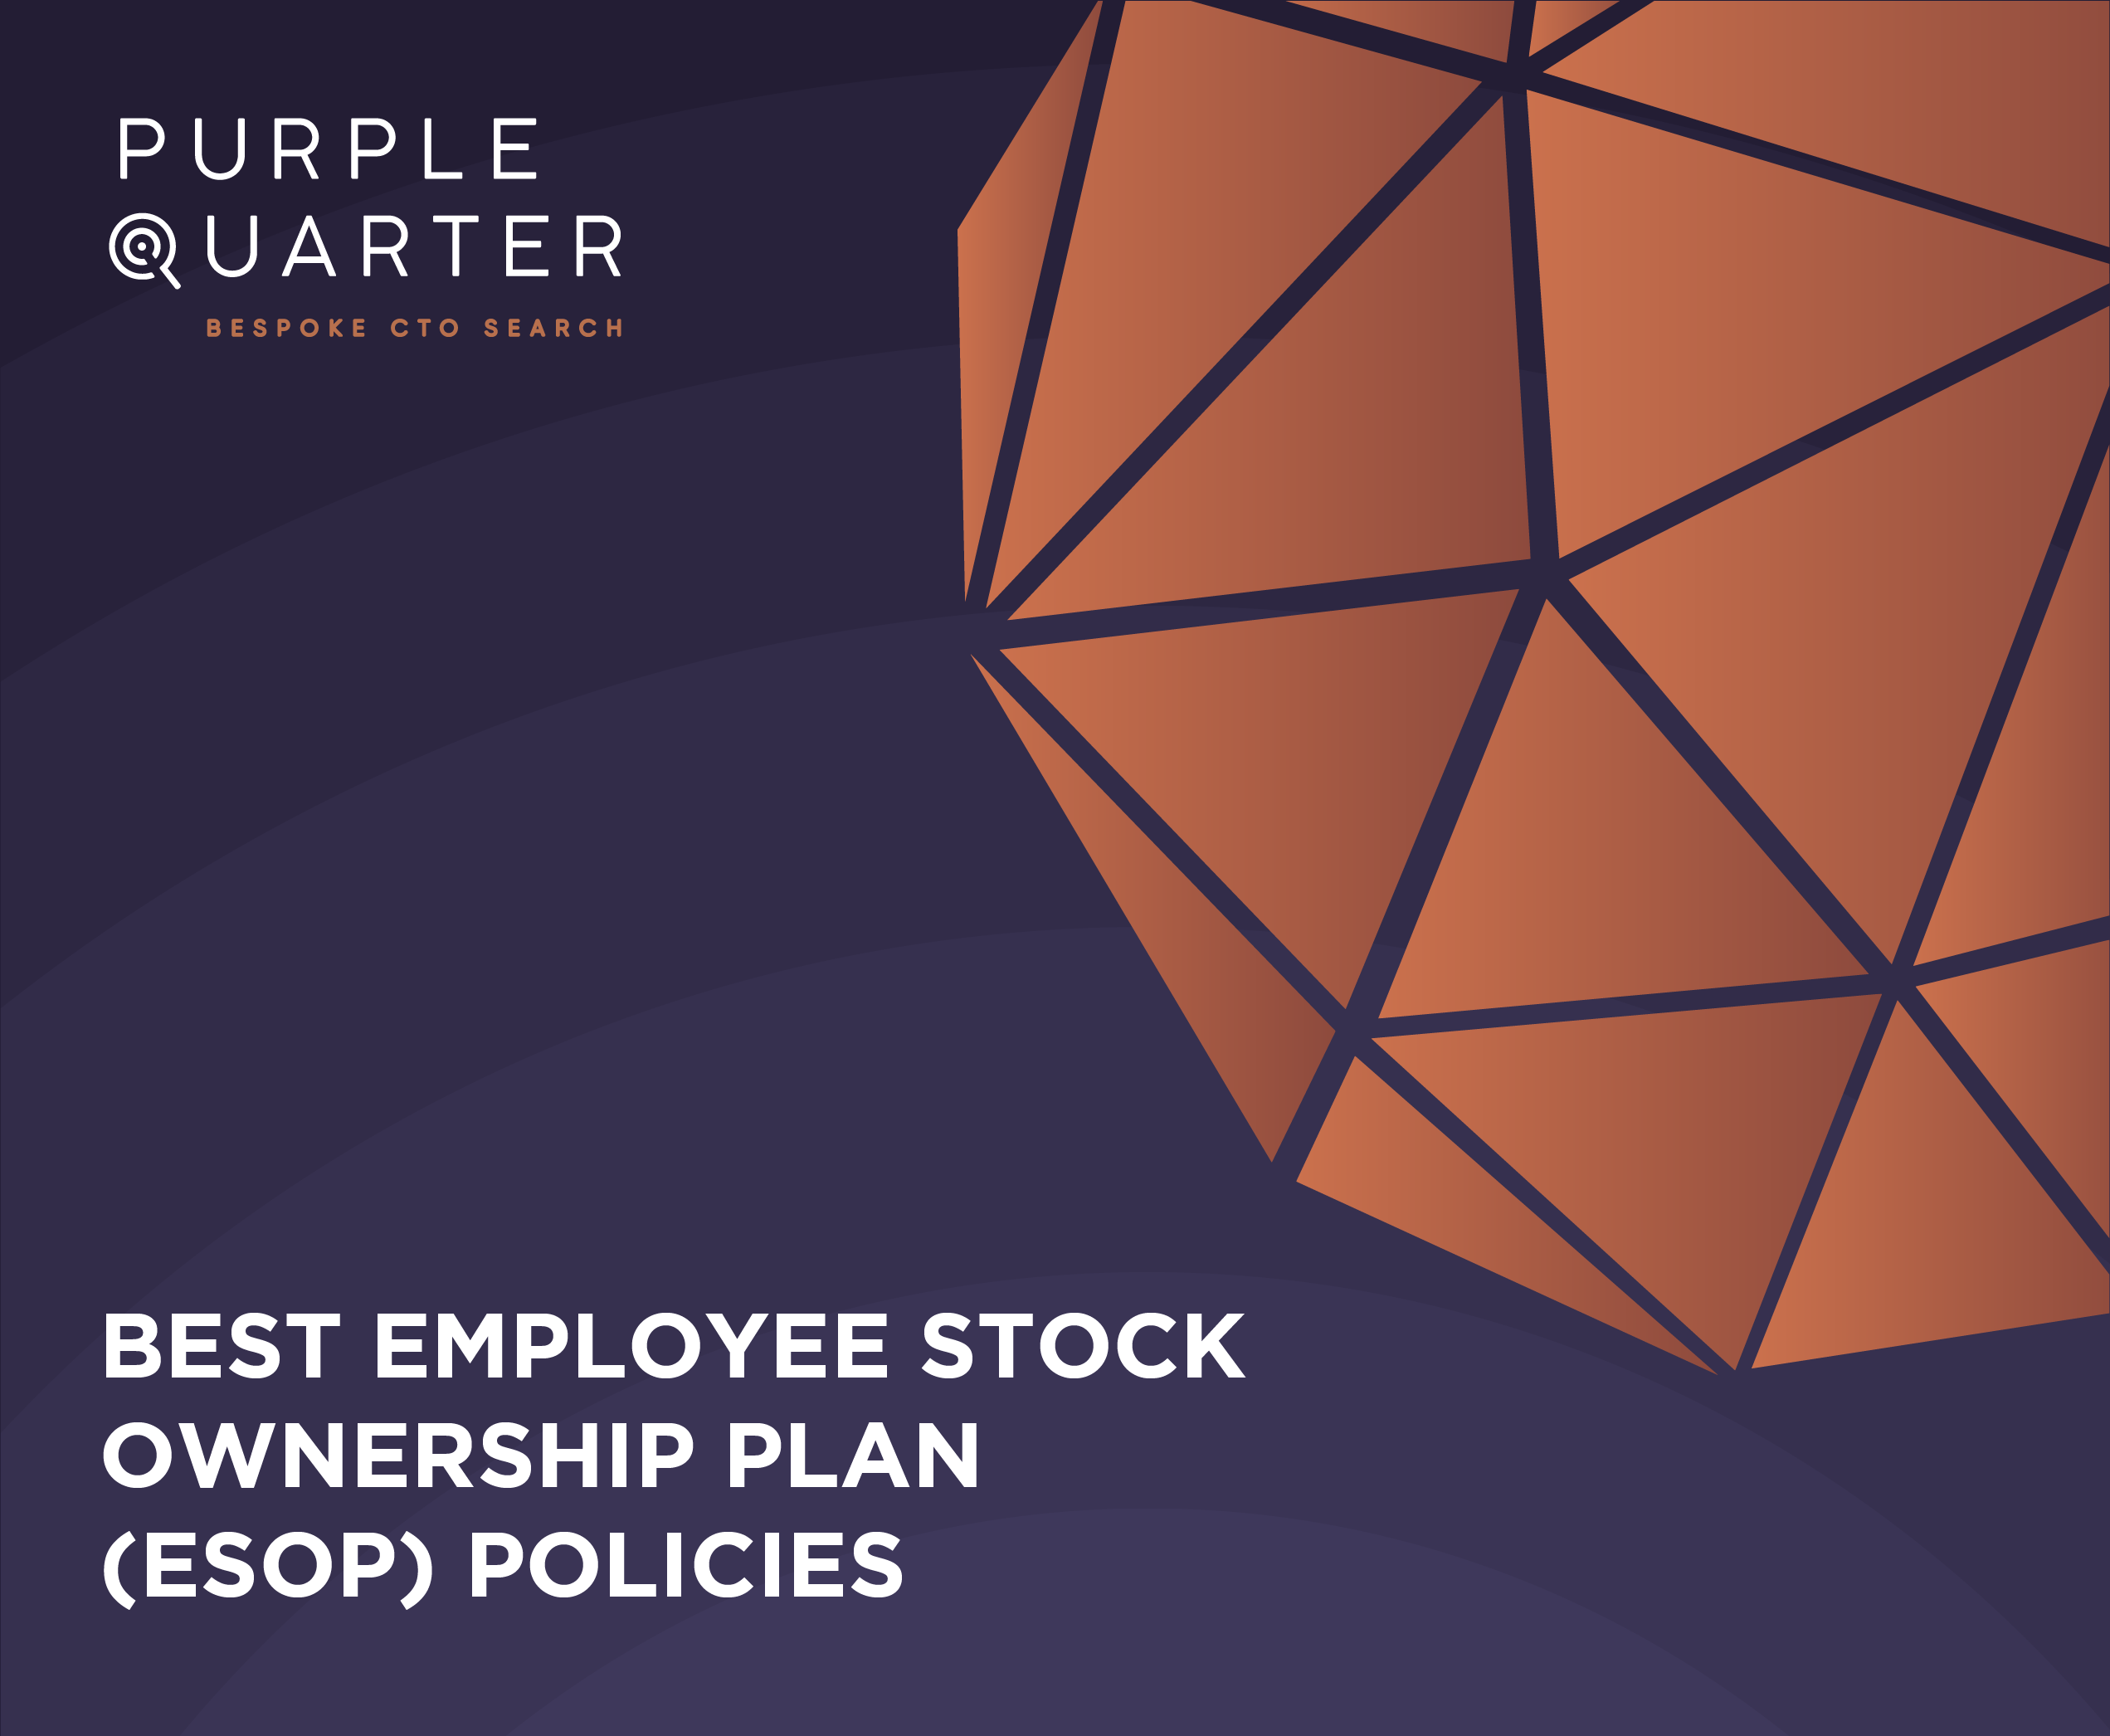 Purple Quarter ESOP policies